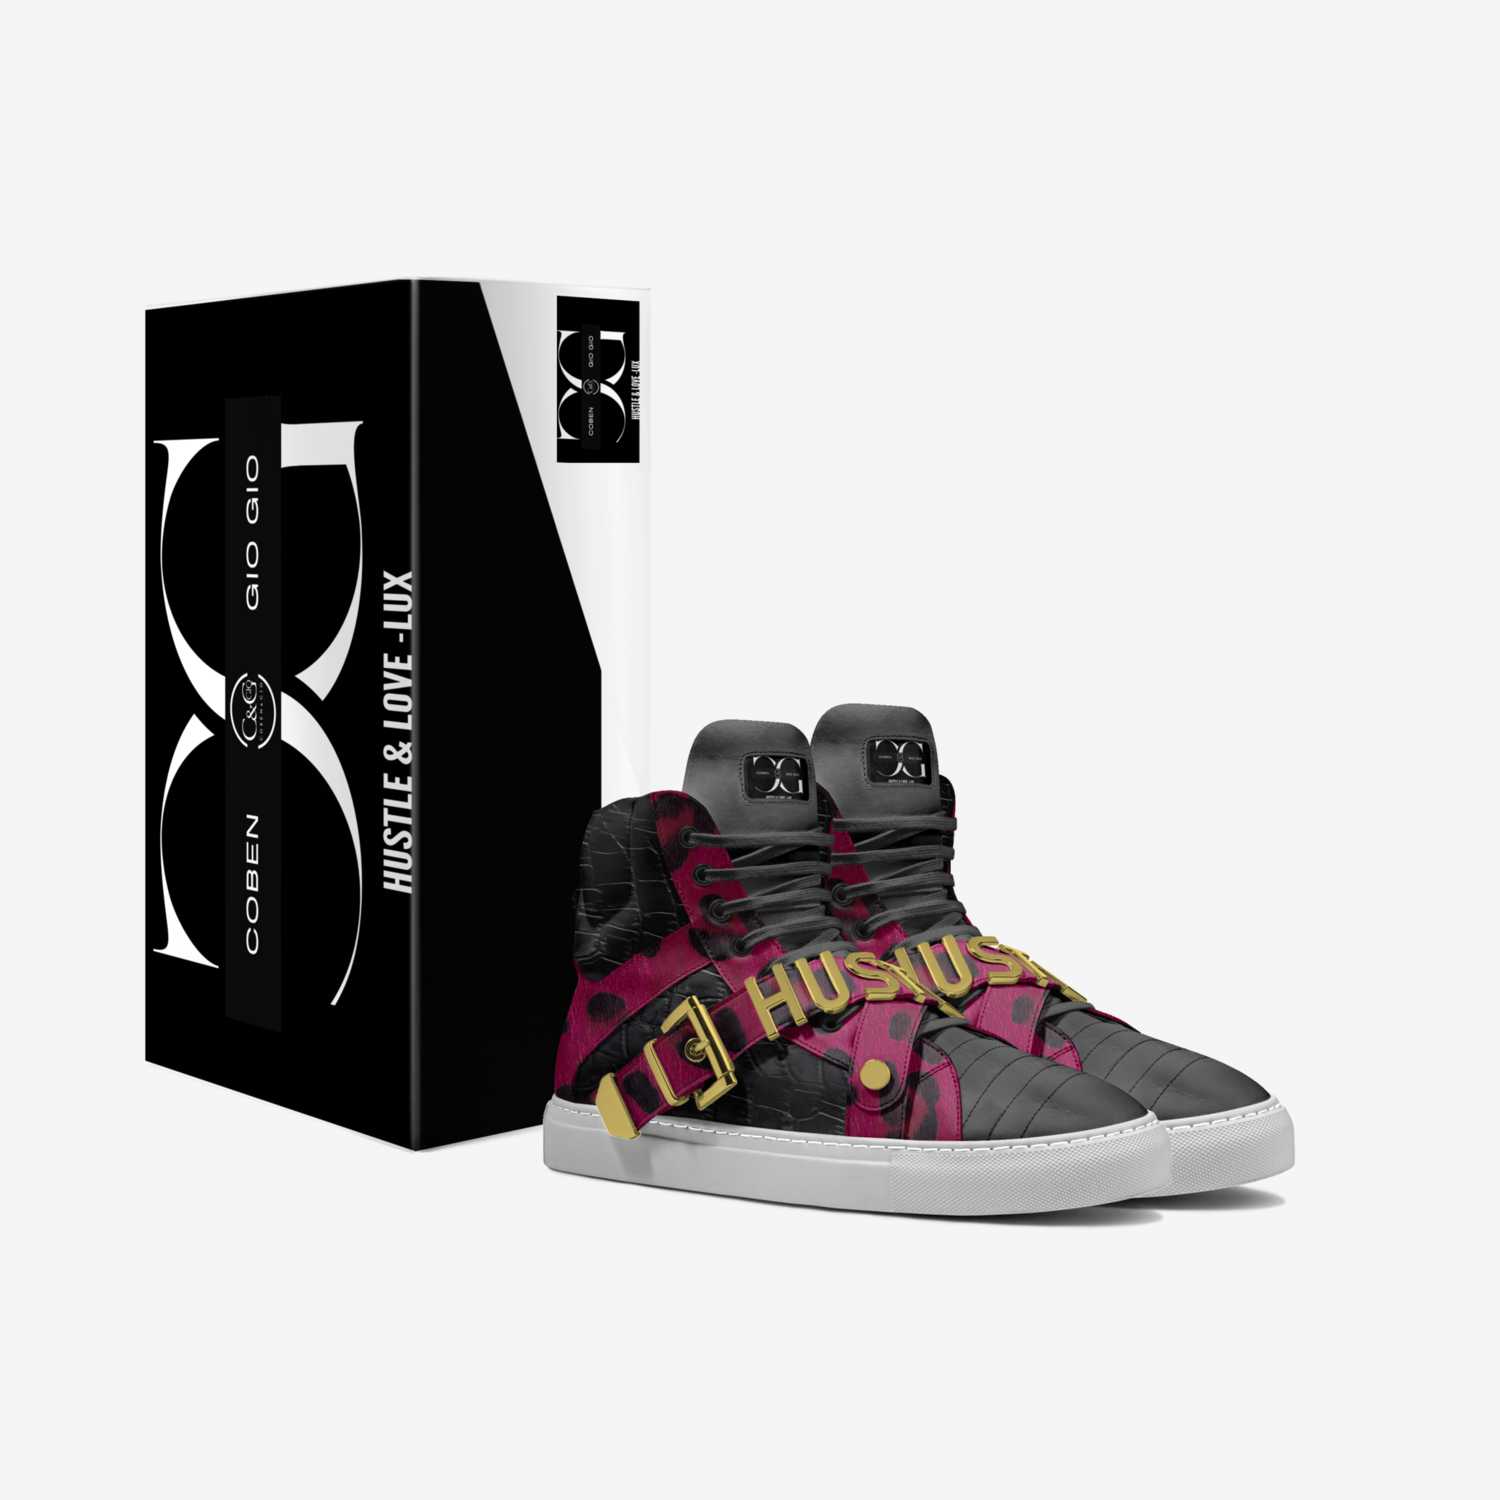 DA GIO LX custom made in Italy shoes by Coben&gio Cobenpolo | Box view